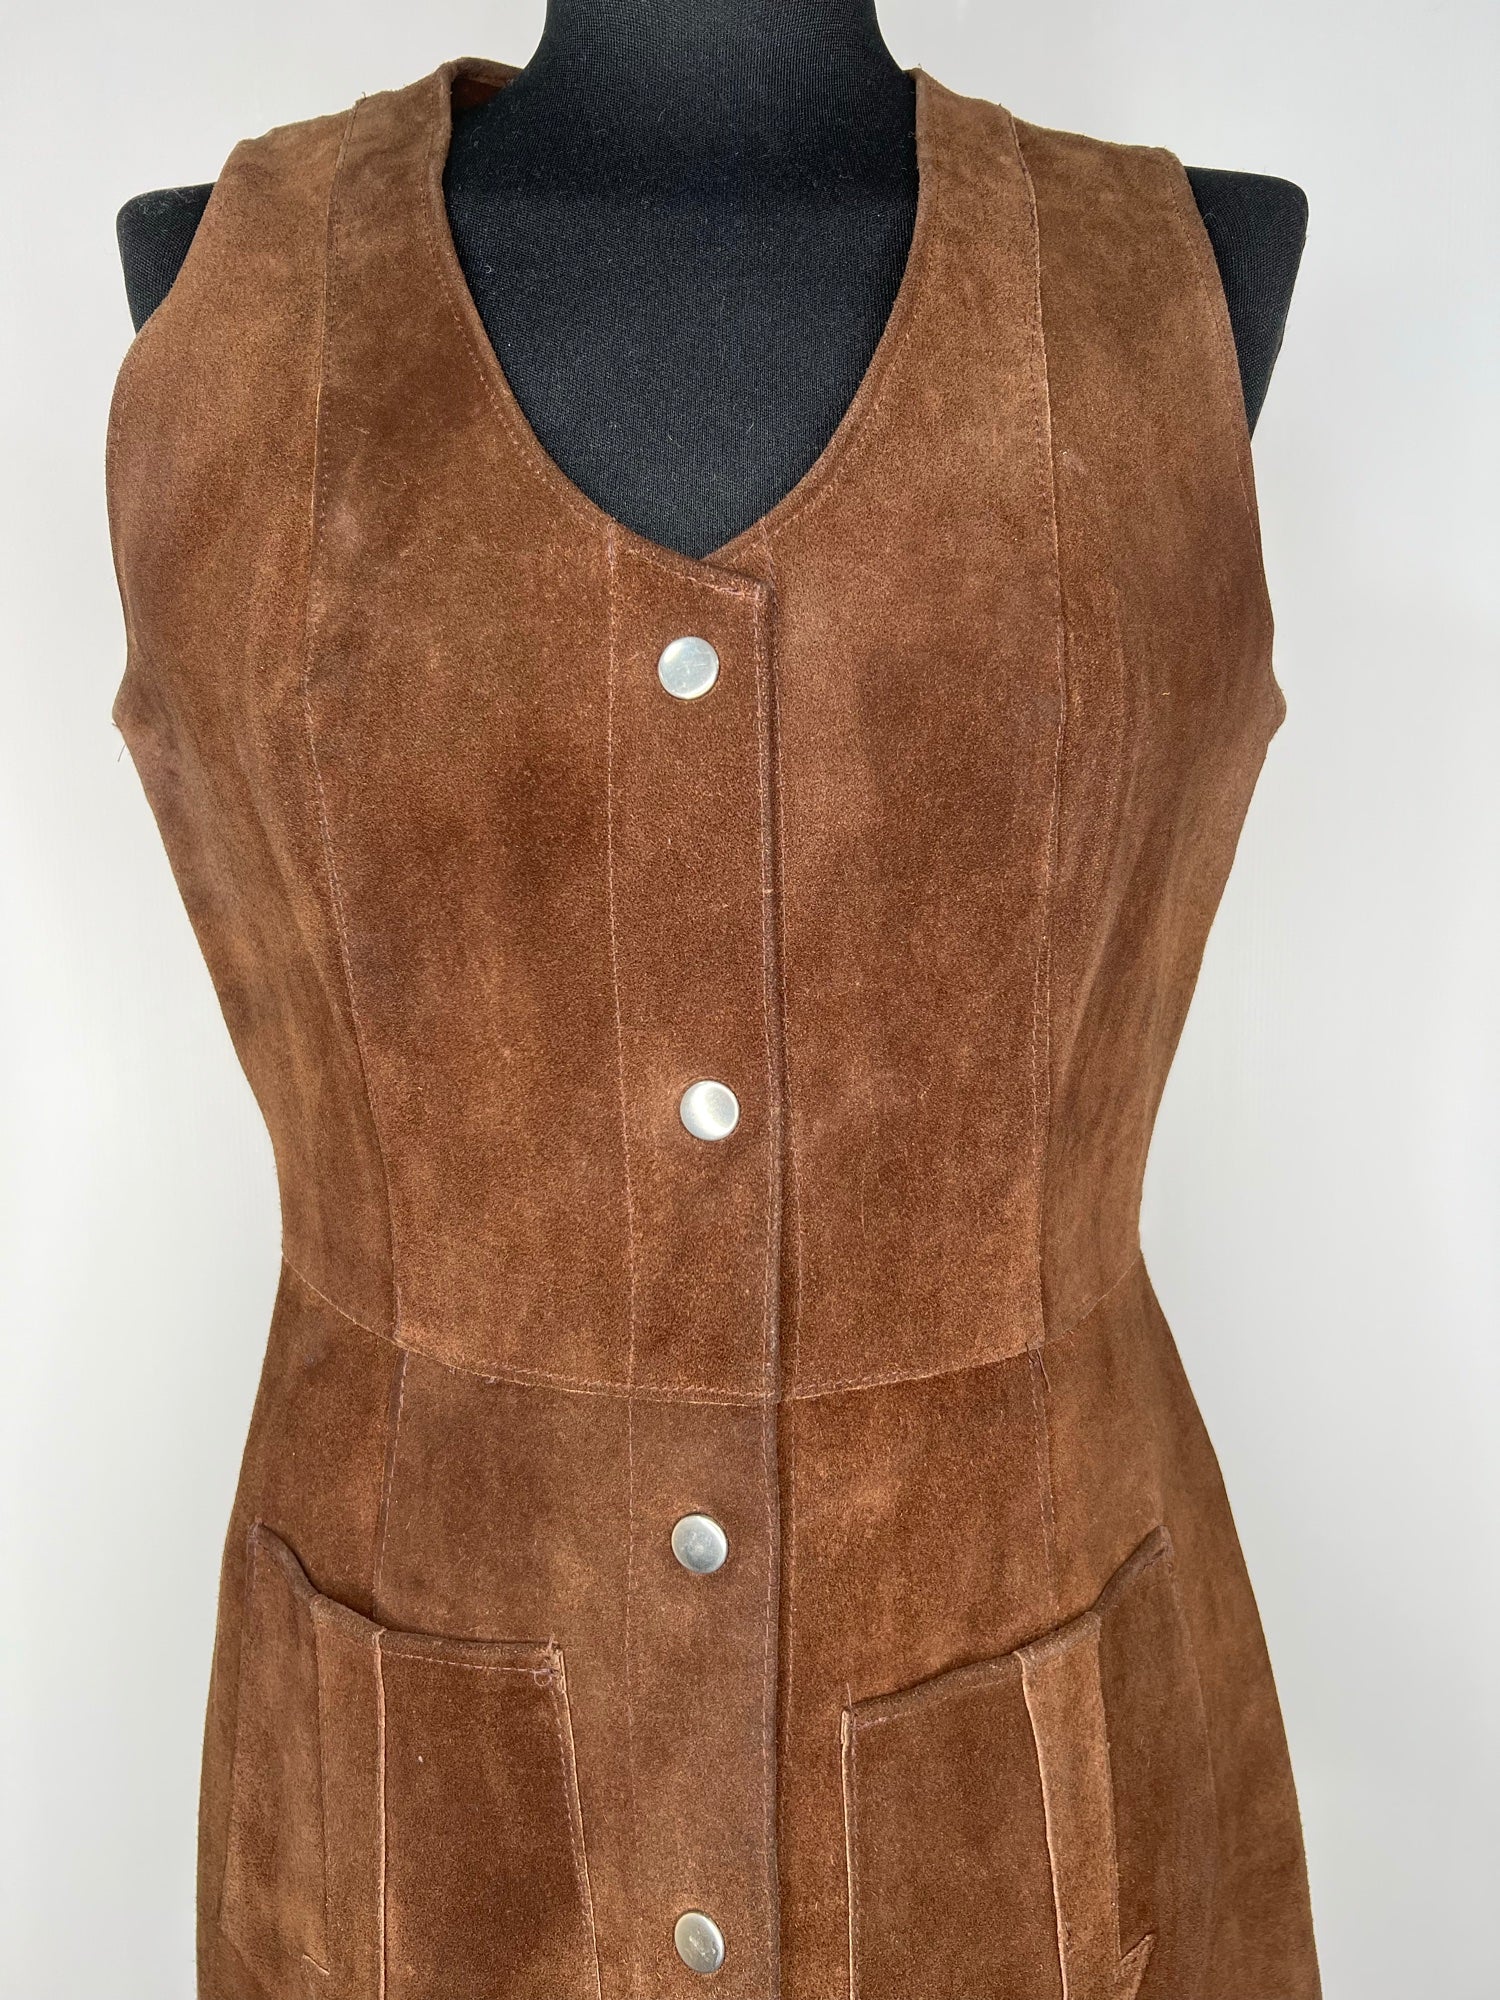 waistcoat  vintage  vest  tunic  Suede Jacket  Suede  mod  Jacket  hippie  gogo  brown  boho  70s  60s  1970s  1960s  12